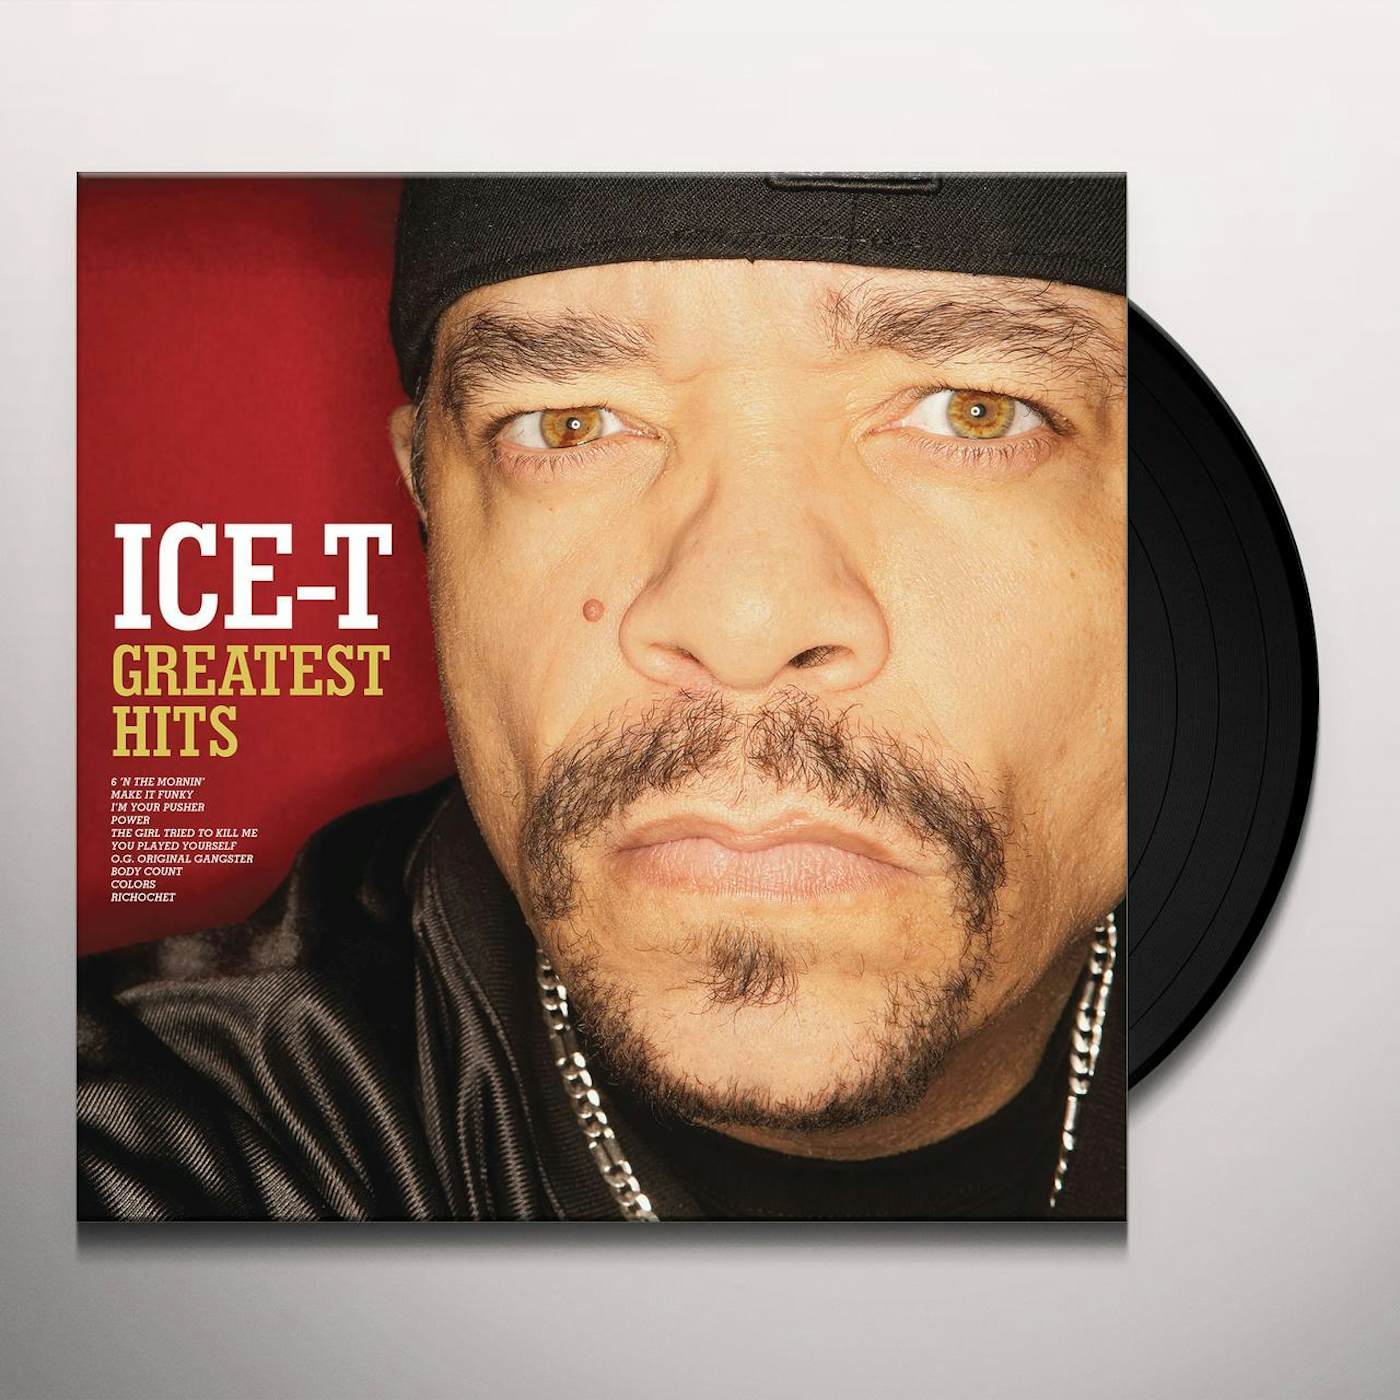 Ice-T – You Played Yourself Lyrics